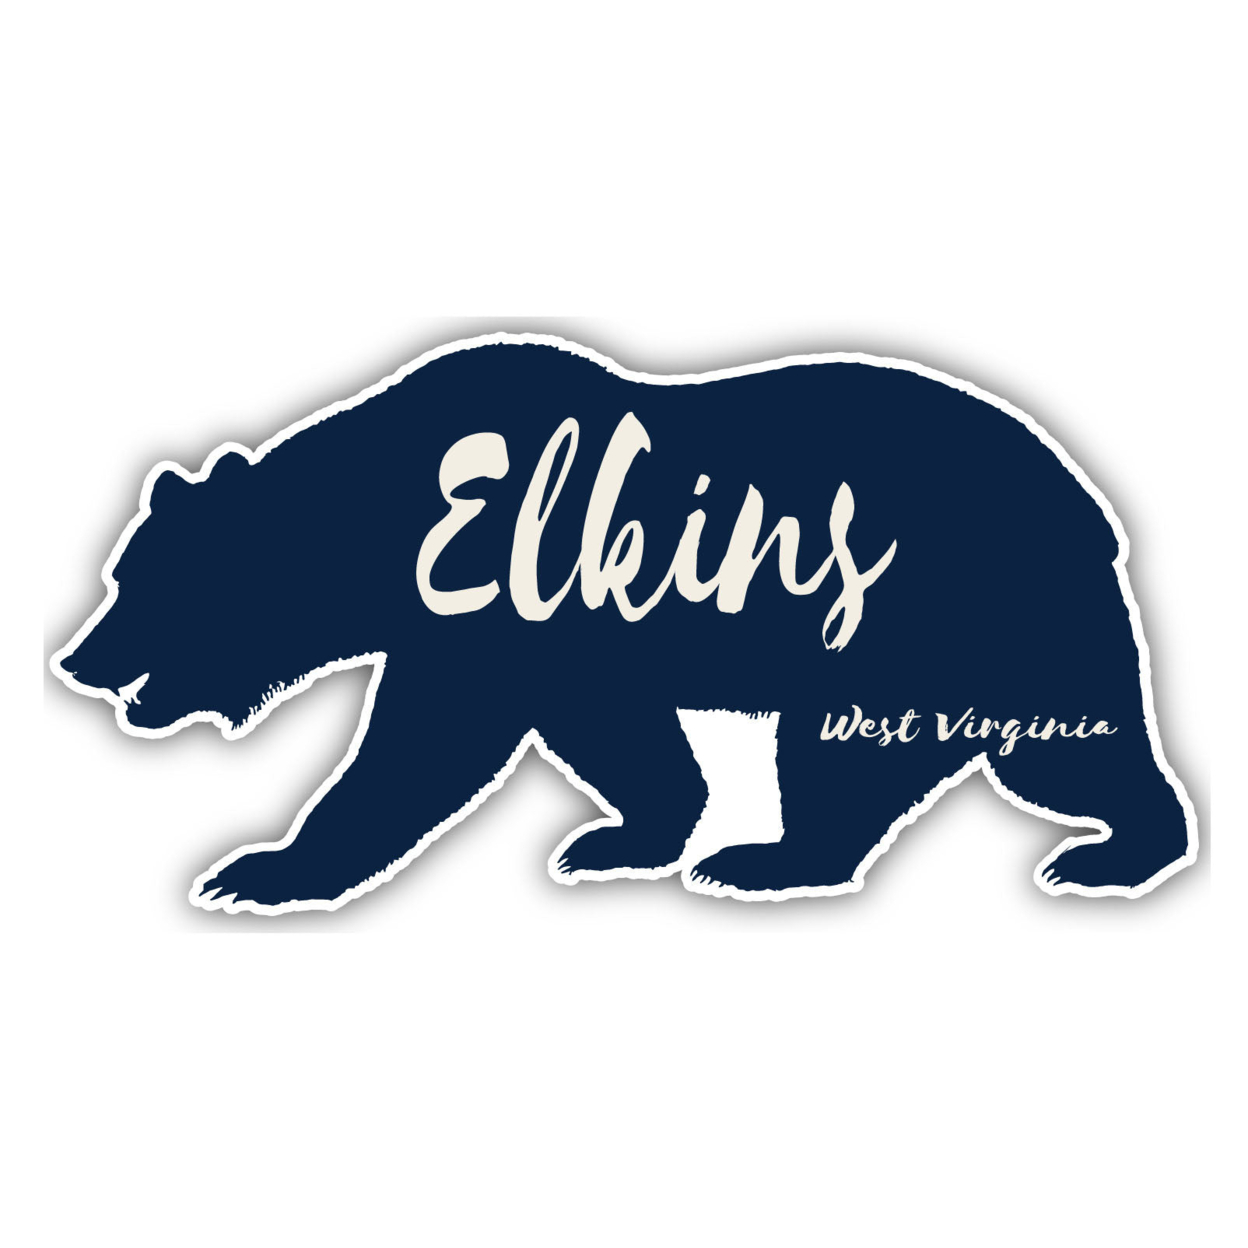 Elkins West Virginia Souvenir Decorative Stickers (Choose Theme And Size) - 4-Pack, 2-Inch, Tent